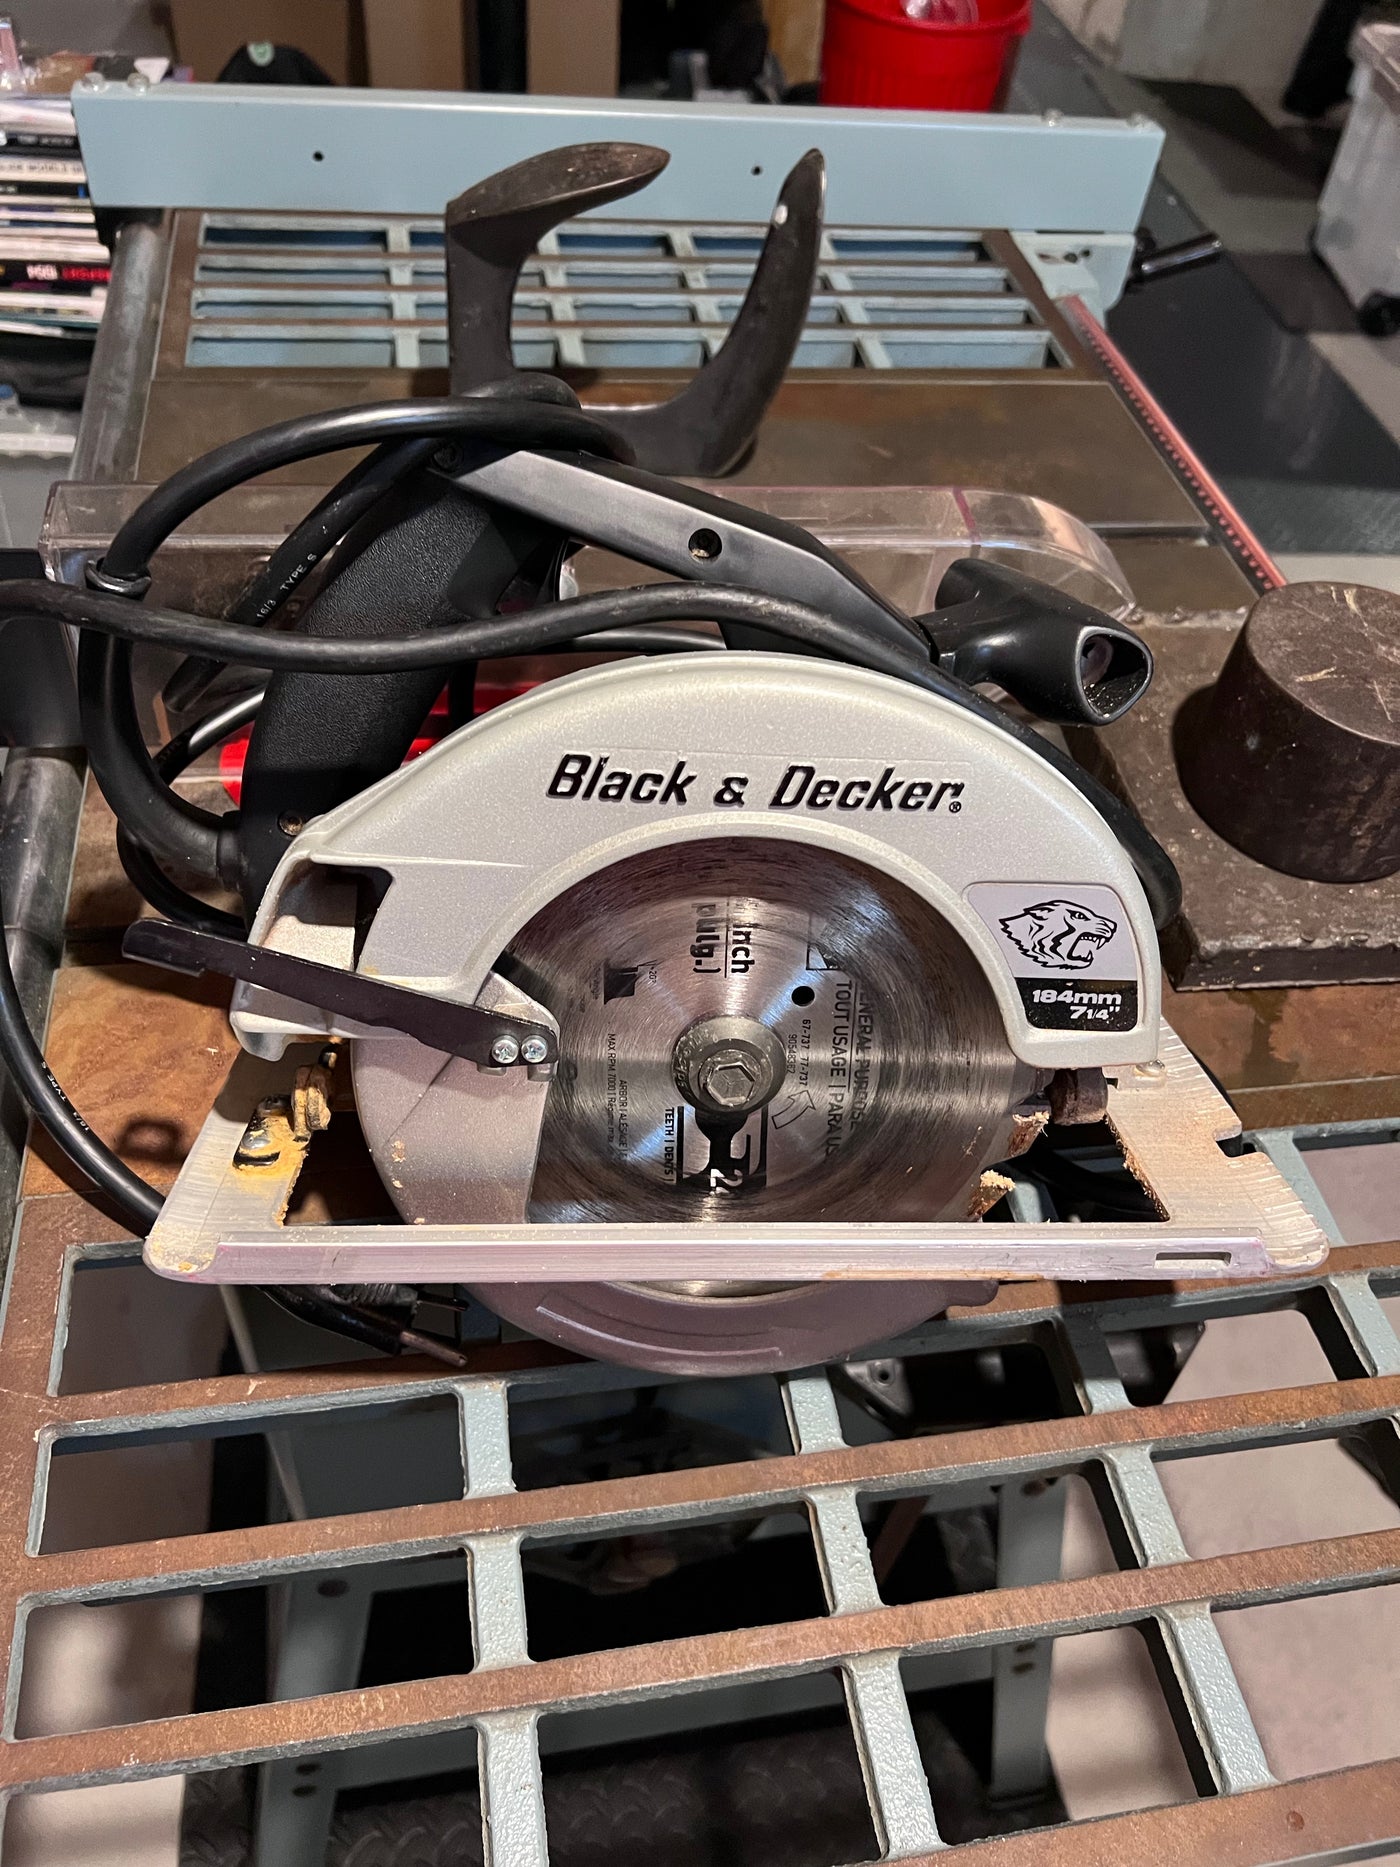 Black & Decker 7-1/4 In. 12-Amp Circular Saw